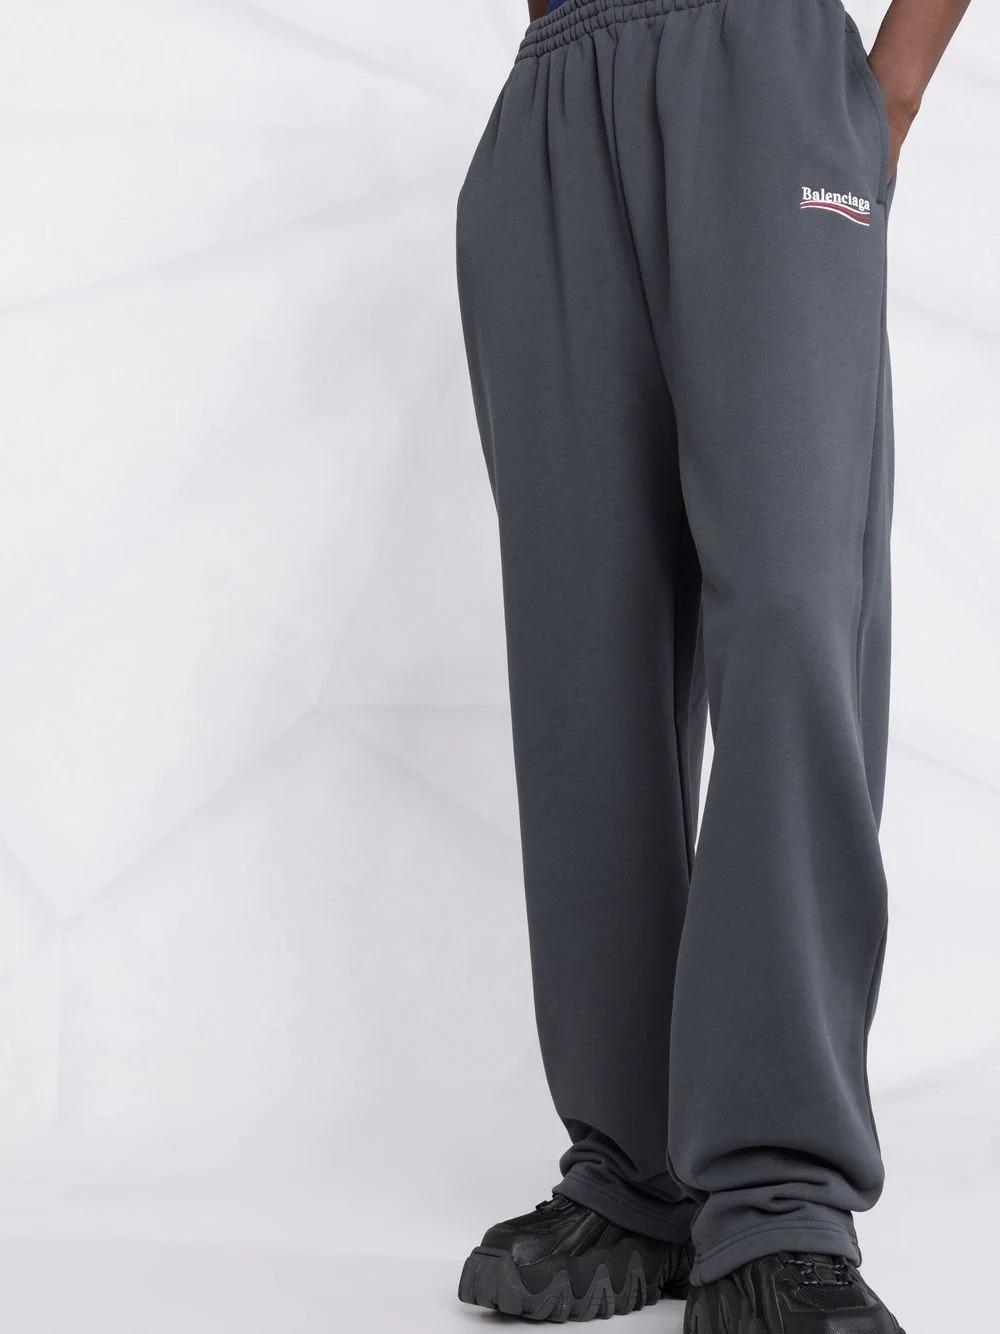 Balenciaga jogging Pants in Gray for Men | Lyst